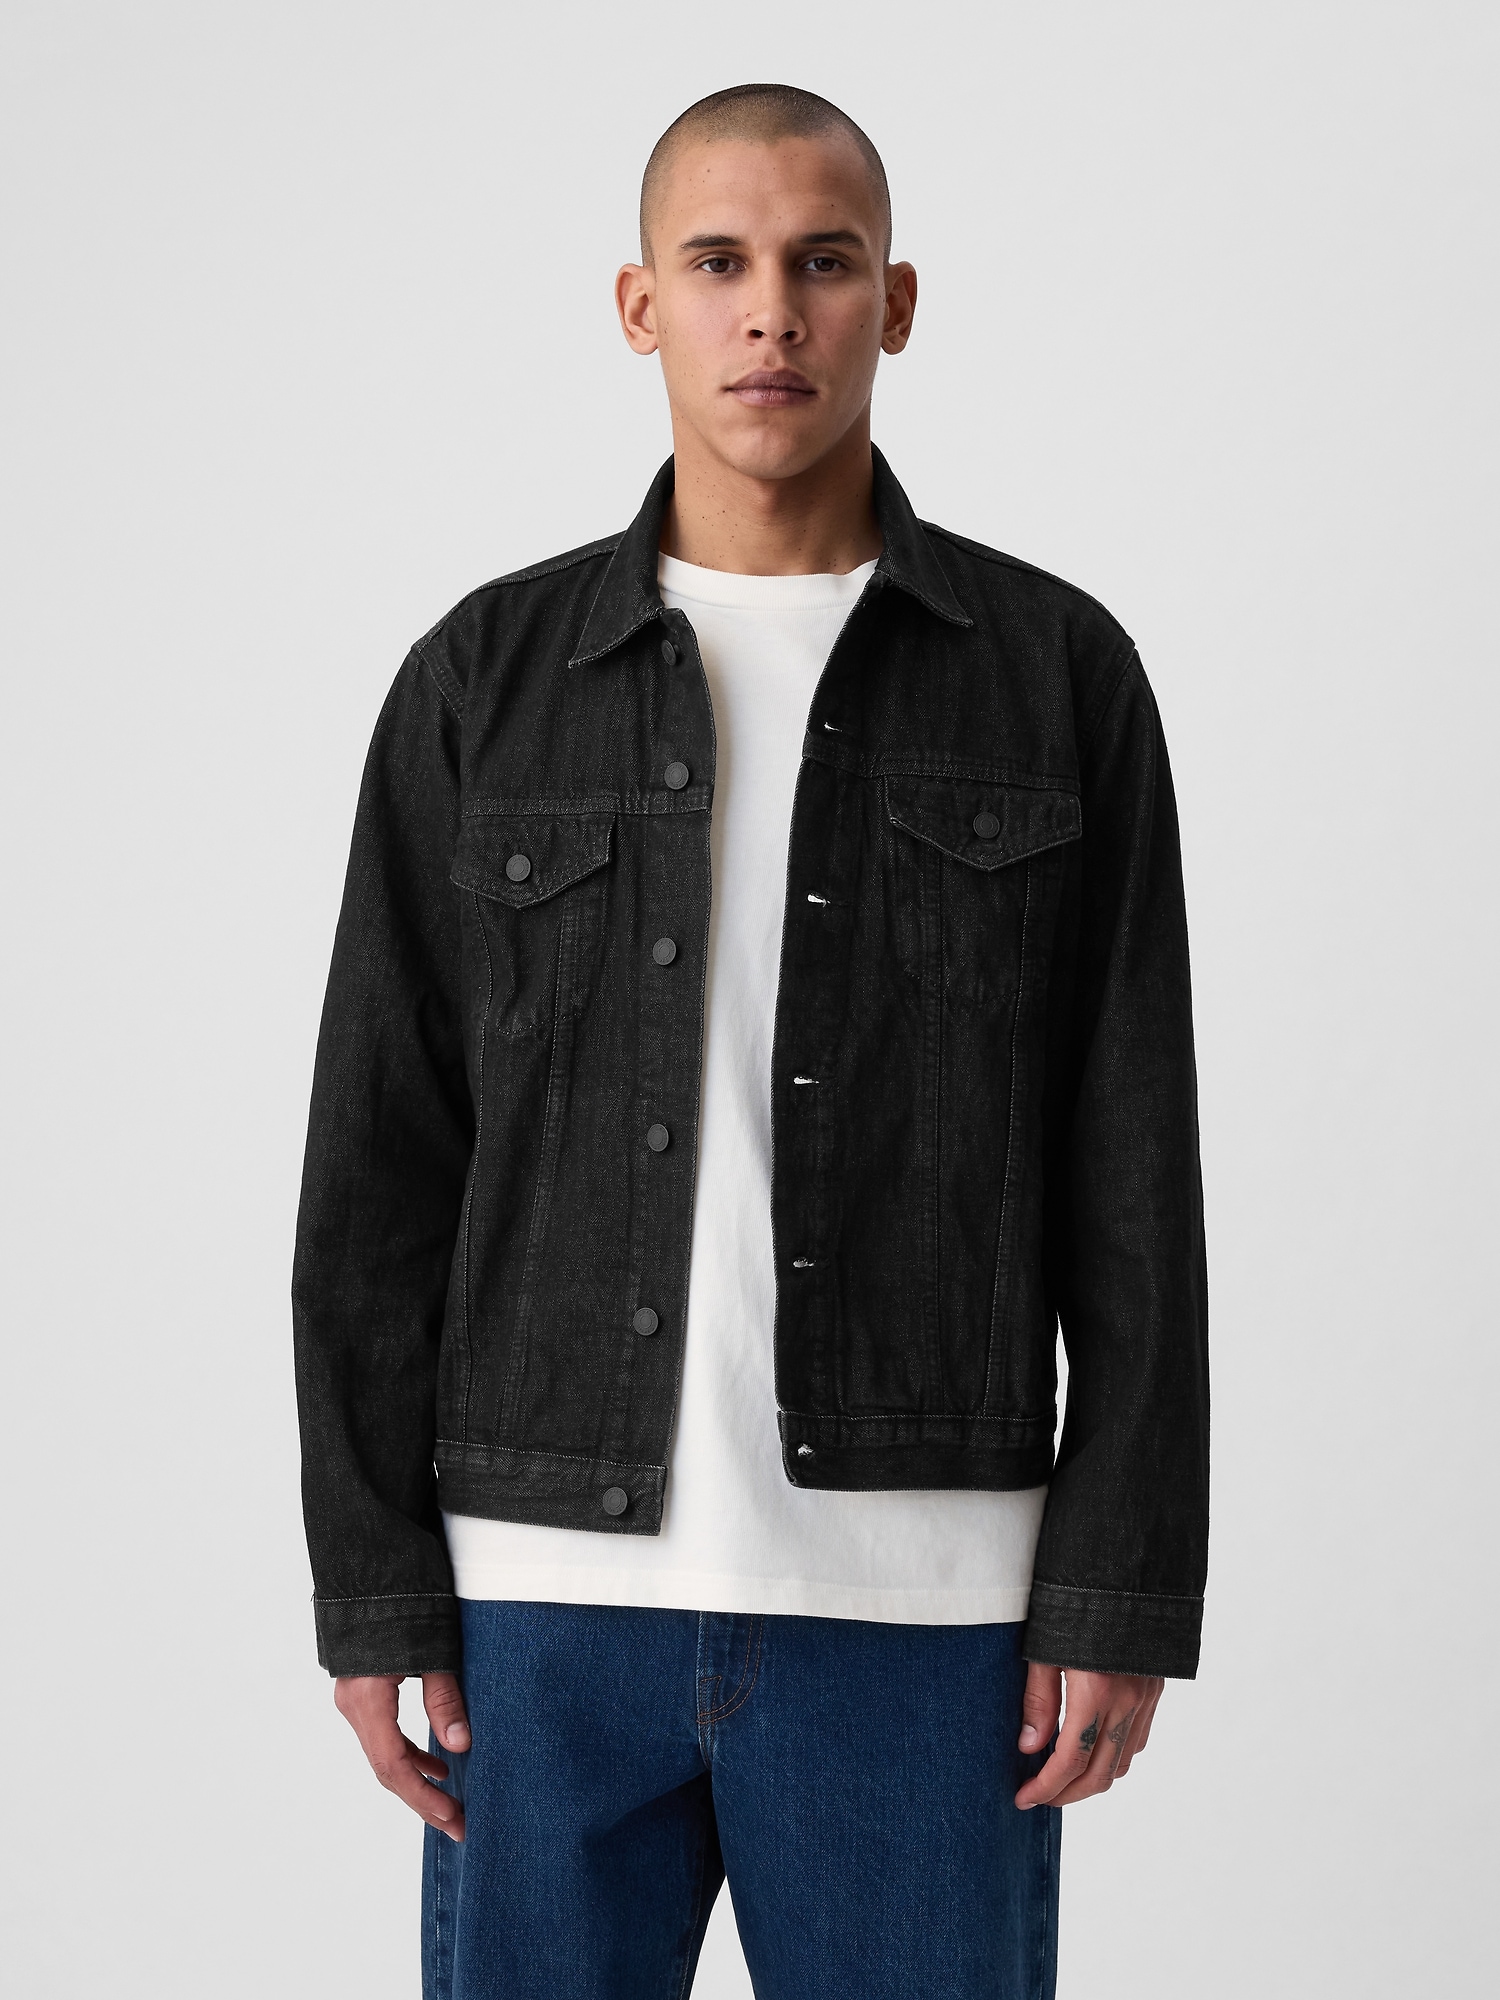 Trucker Jacket | Black denim jacket men, Black denim jacket outfit, Denim  jacket men